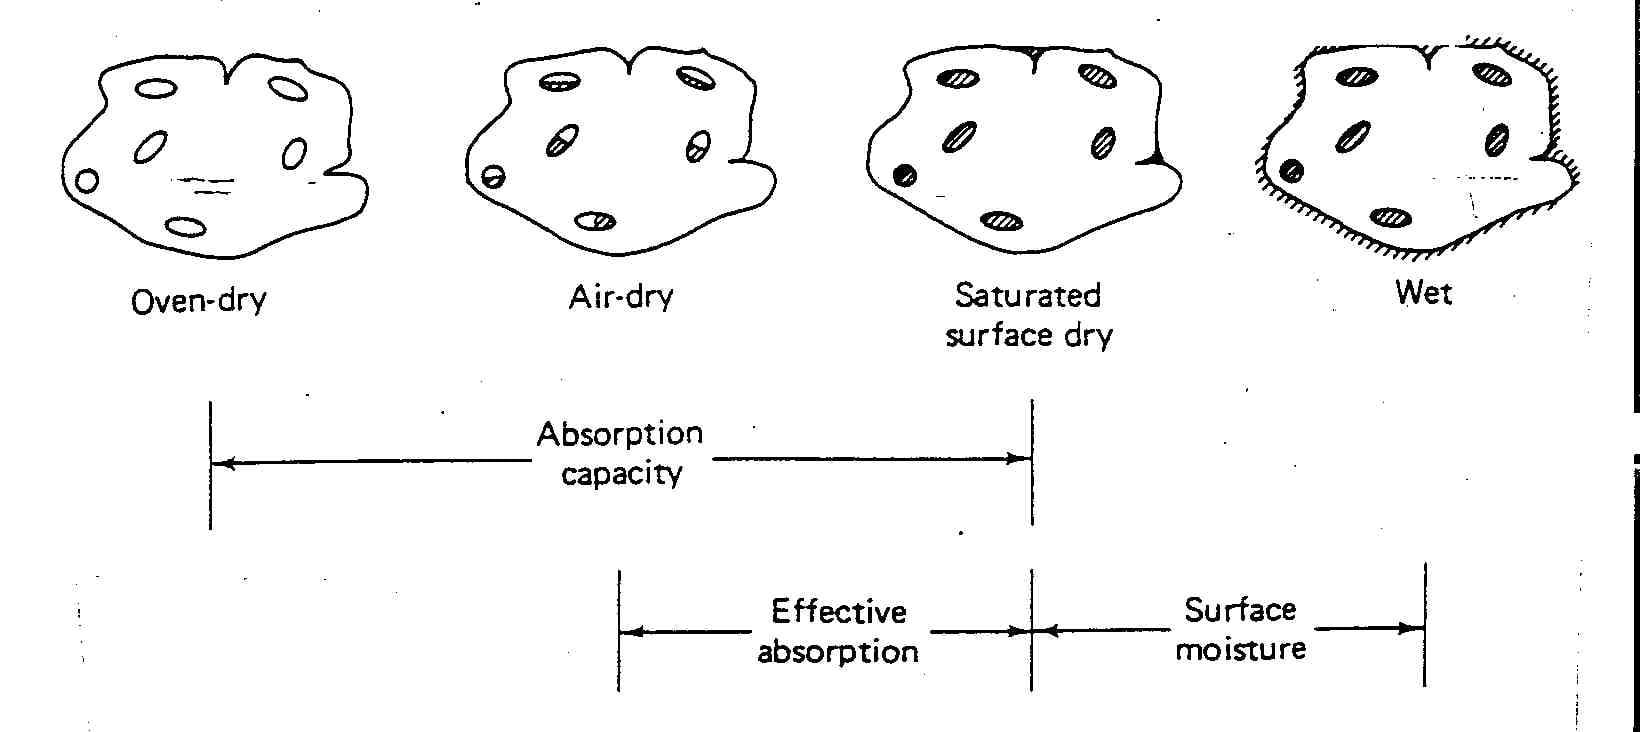 Moisture states of aggregates